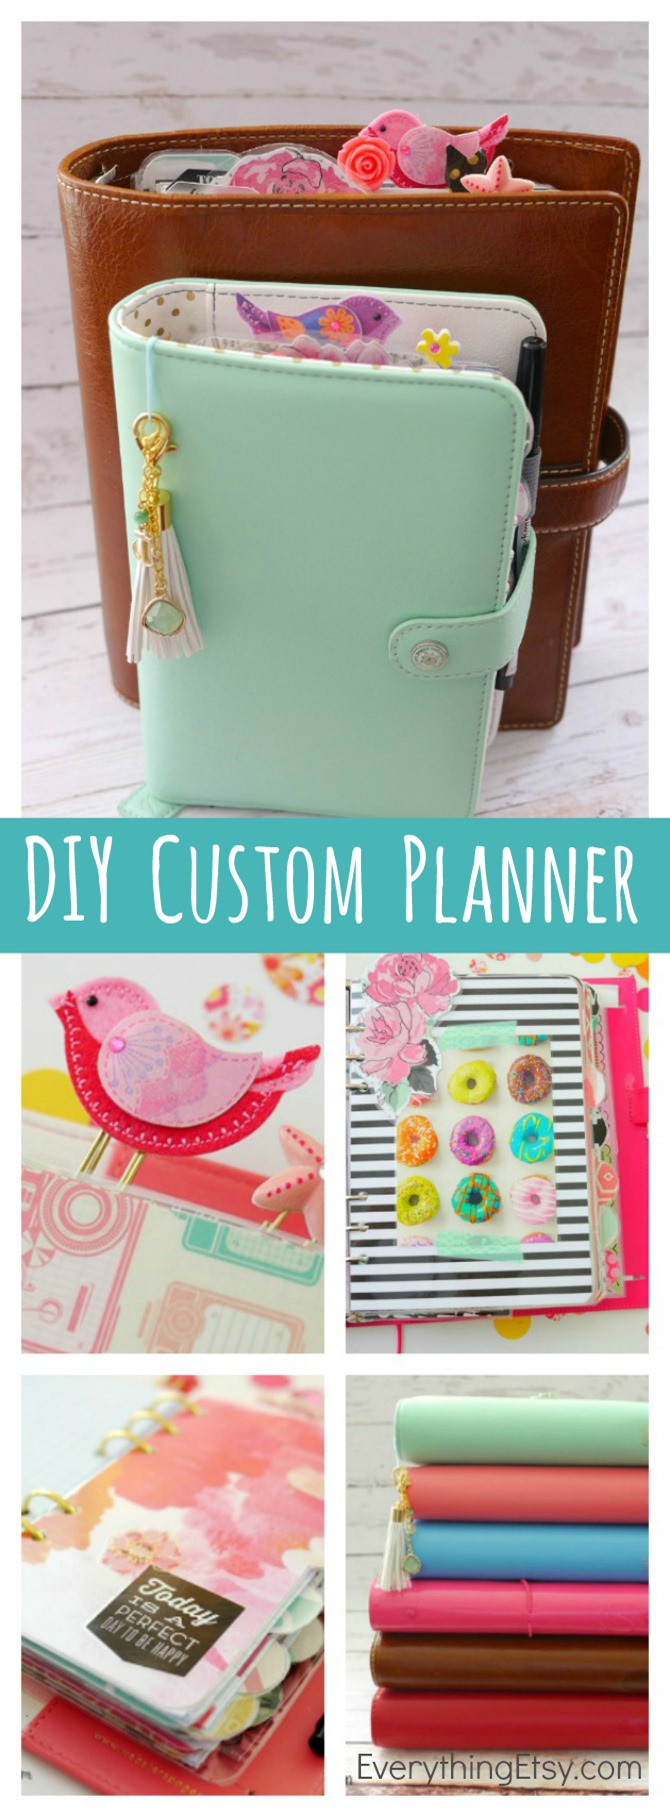 DIY Custom Planner - Get Organized in Style! KimberlyLayton.com